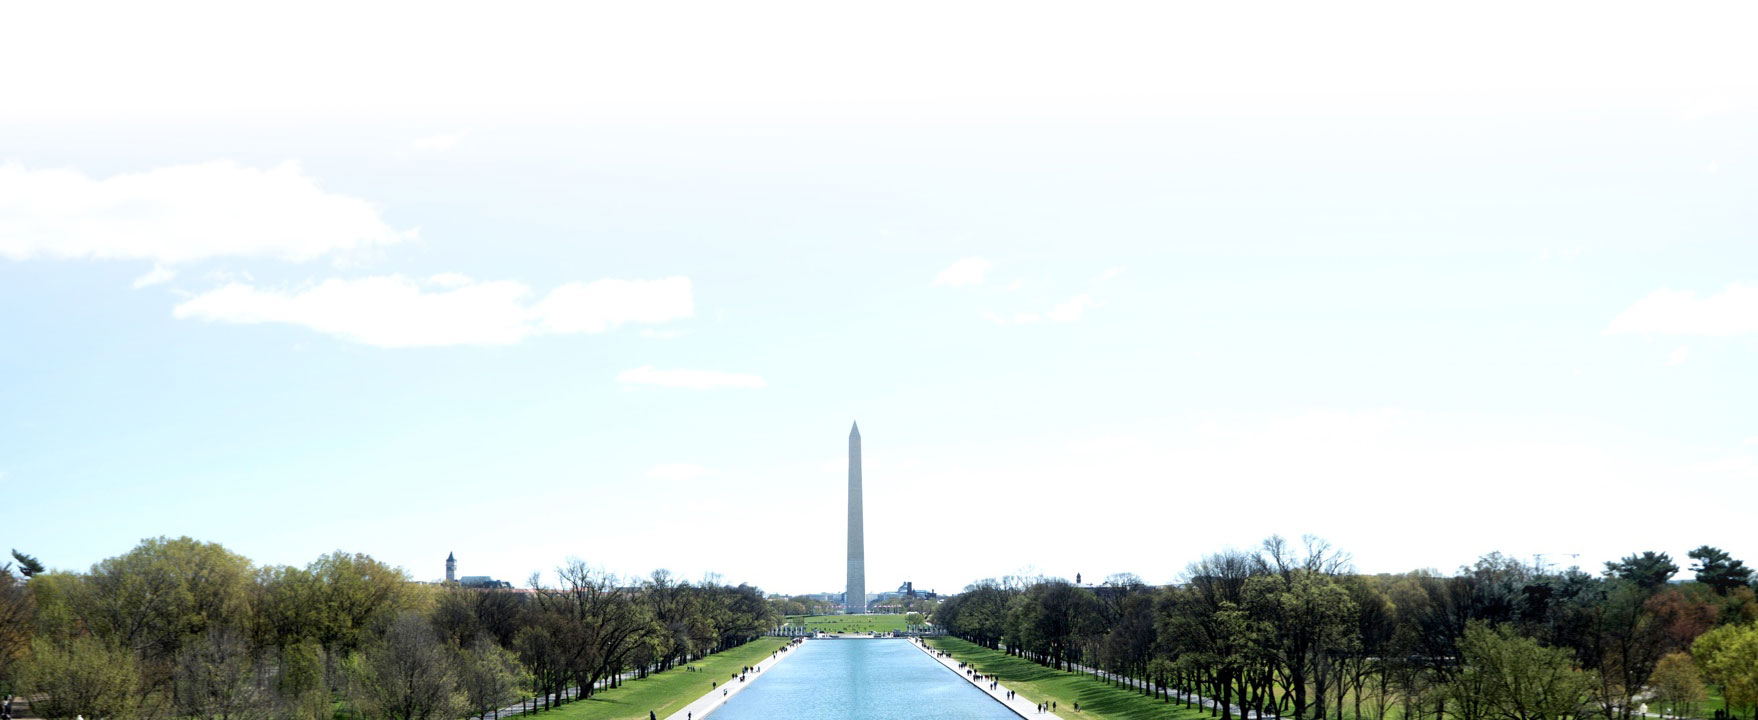 United States Lincoln Memorial in Washington DC